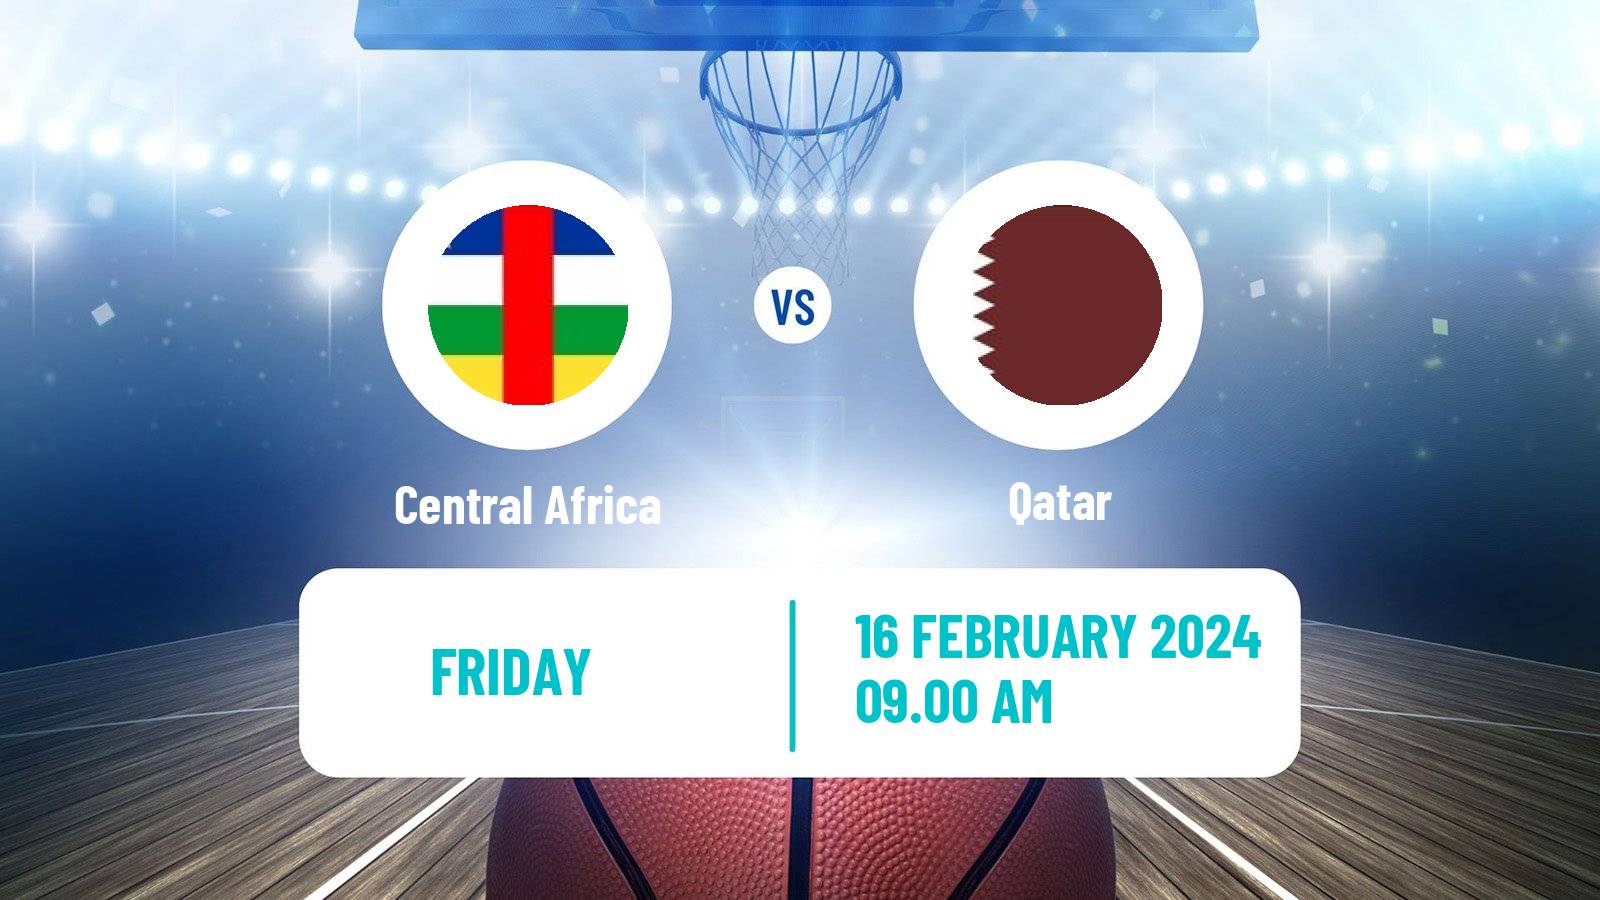 Basketball Friendly International Basketball Central Africa - Qatar